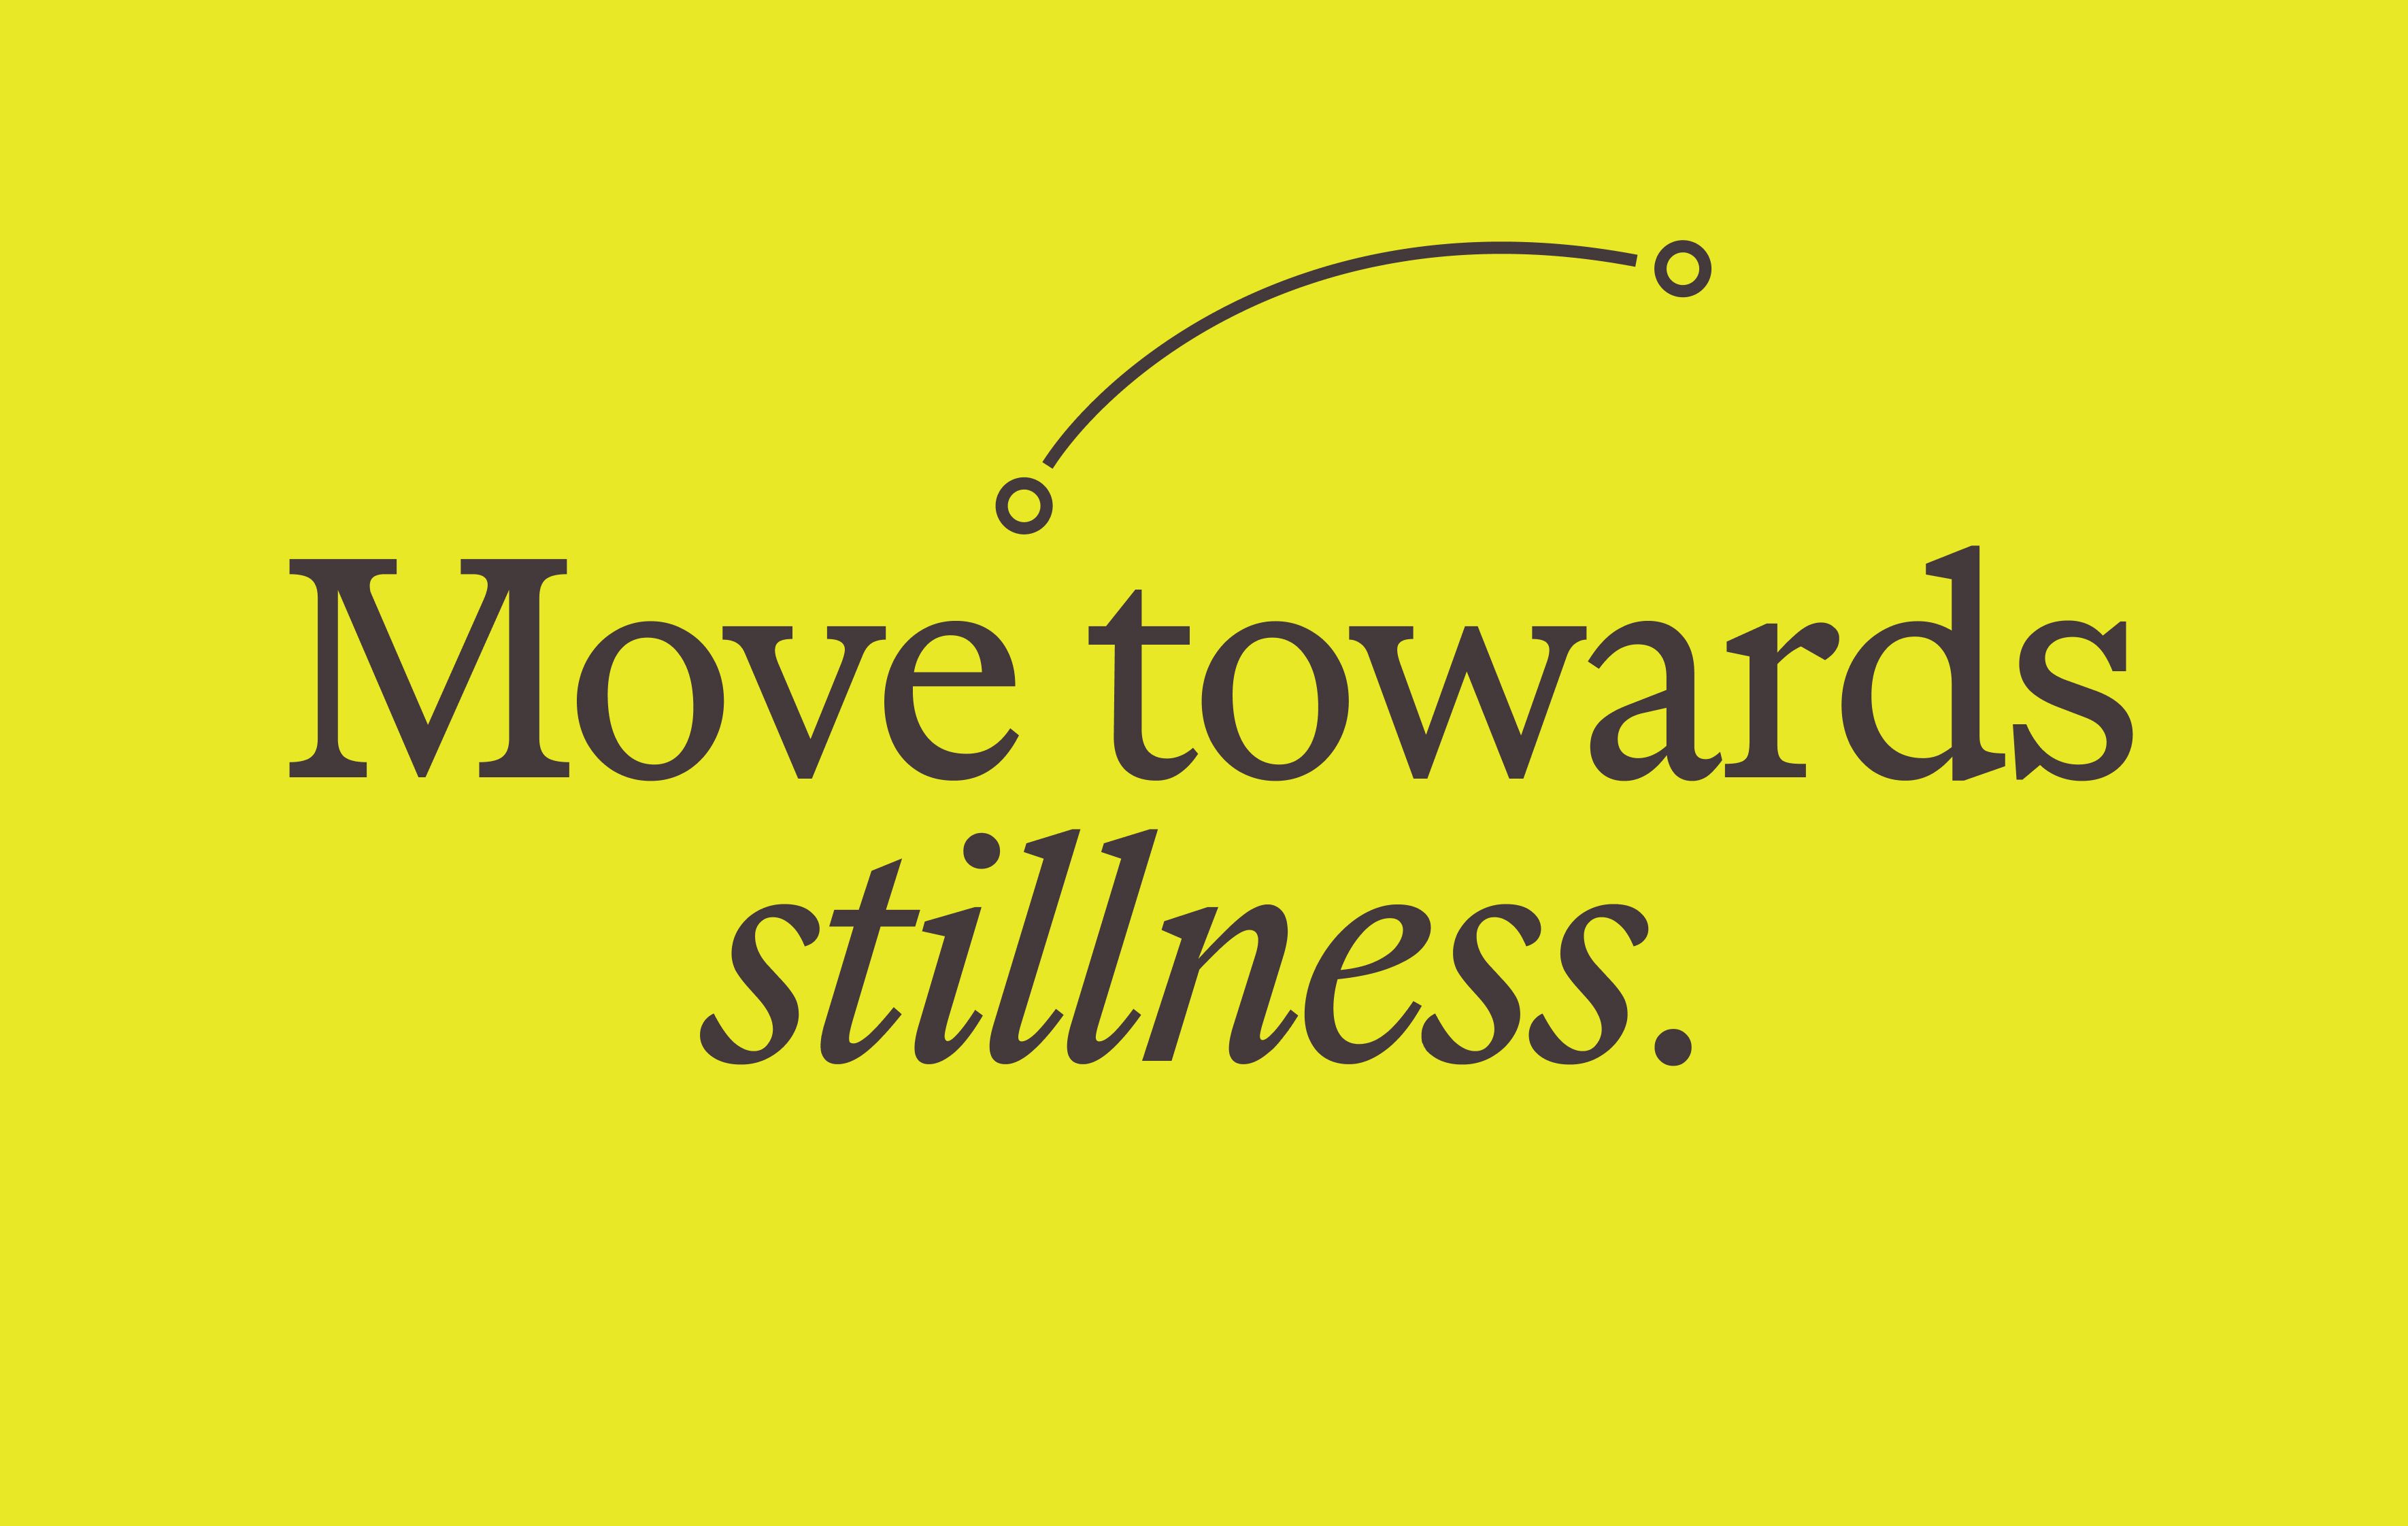 Move towards stillness